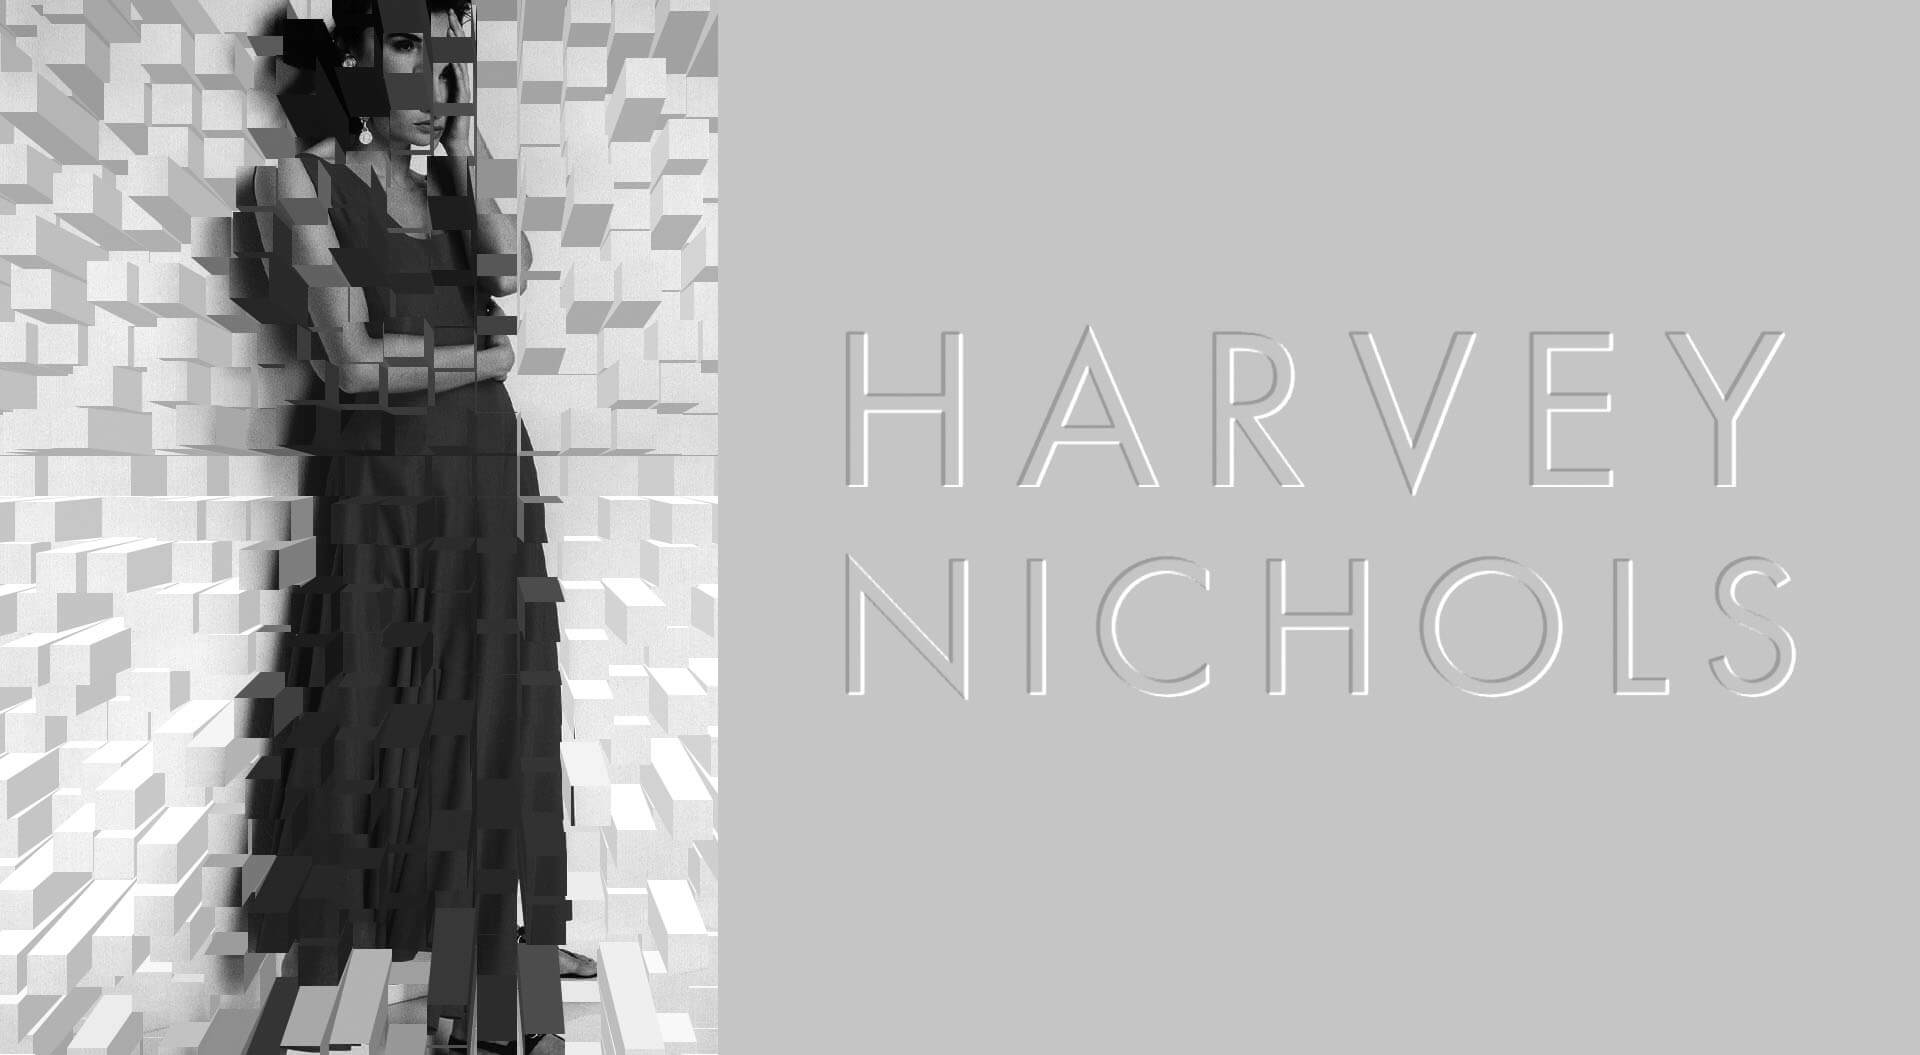 Harvey Nichols fashion department store branding